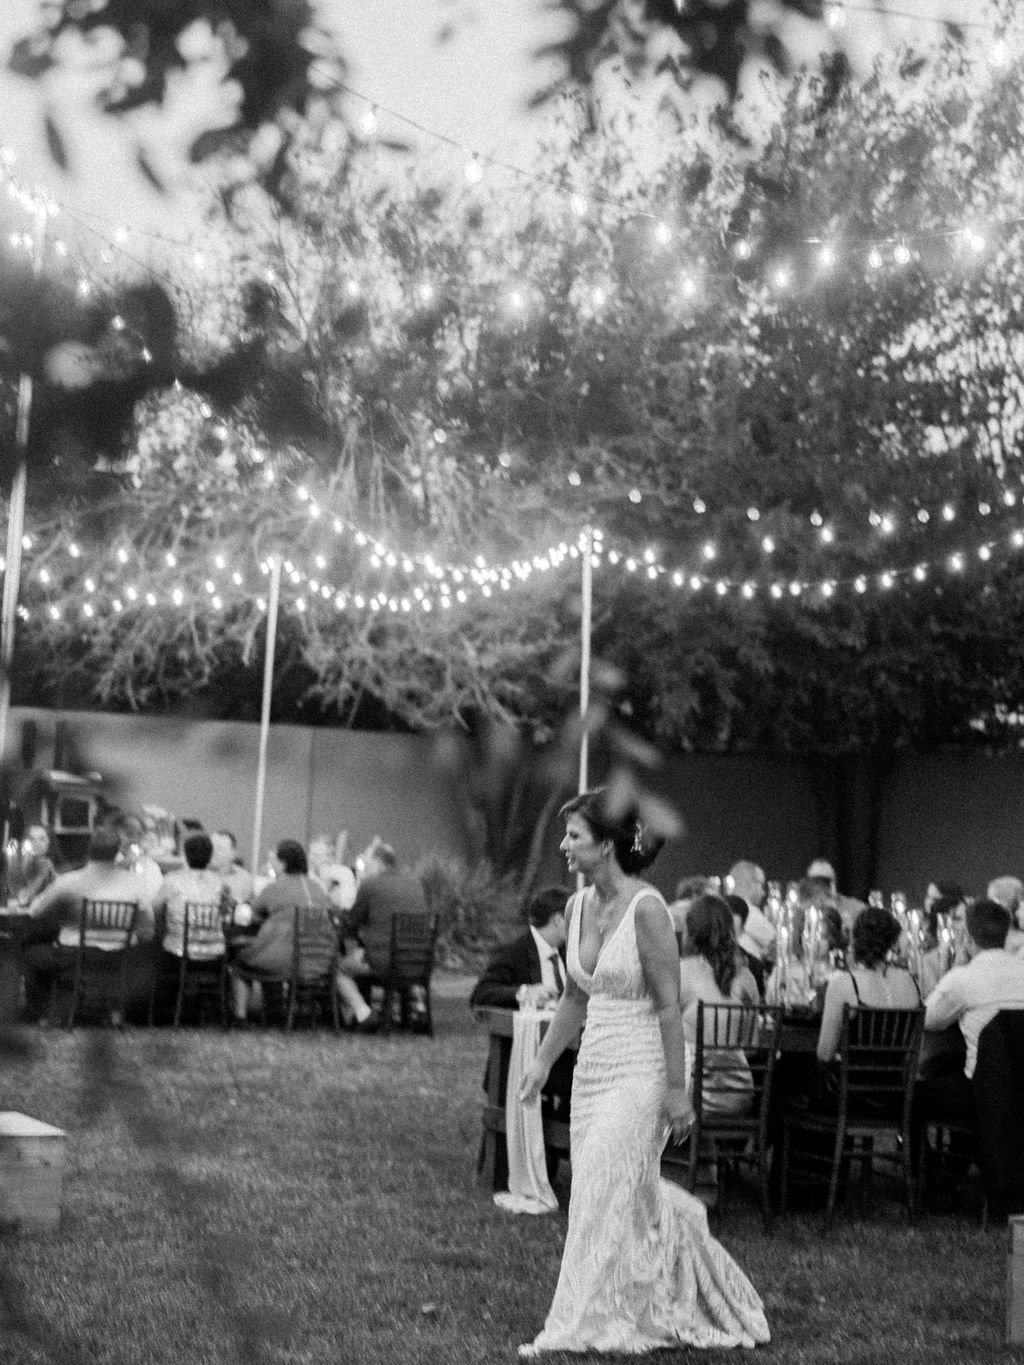 Dreamy Backyard Wedding with Moody Undertone - Konsider It Done - Arizona AZ Wedding Event Planner, Designer, Coordinator in Scottsdale, Phoenix, Paradise Valley,  Tucson, Sedona, Destination, California, Lake Tahoe 11.jpg